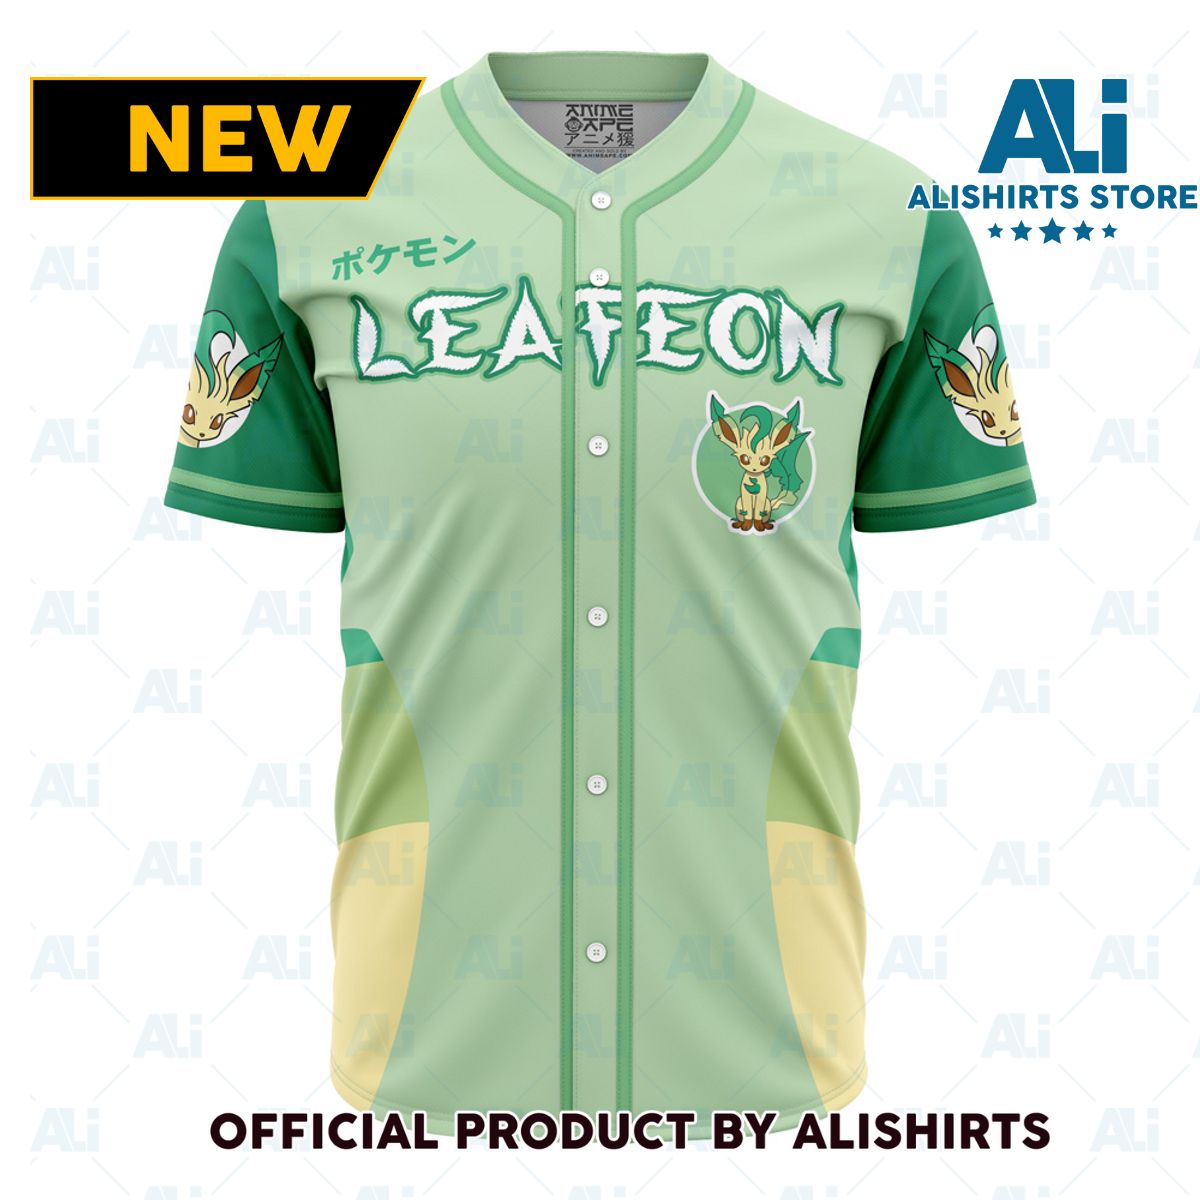 Leafeon Eeveelution Pokemon Baseball Jersey - 8L11